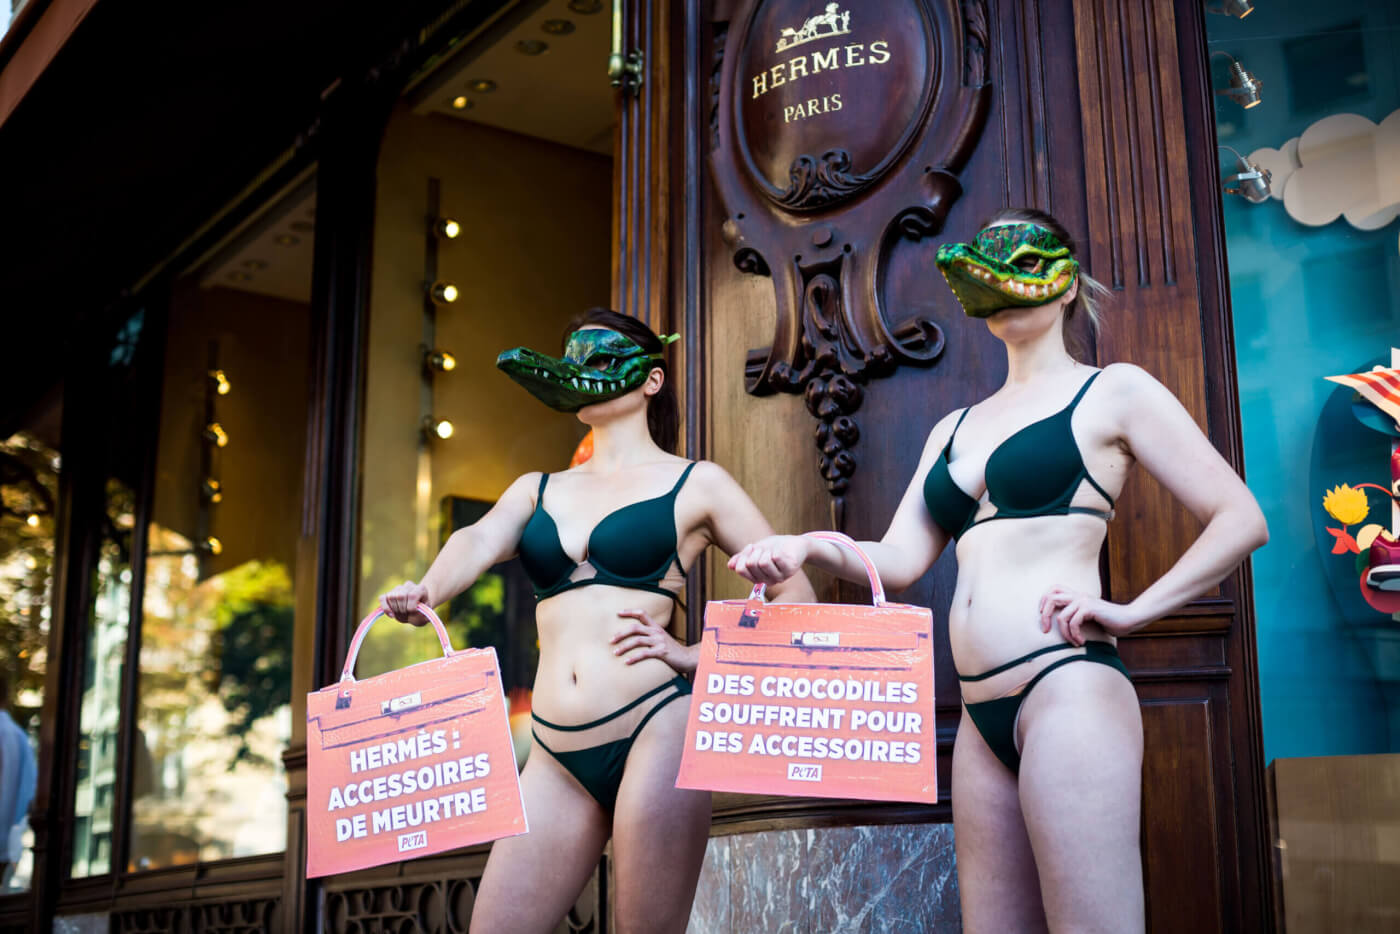 Tash Peterson Dumps 'Guts' Outside Hermès in Crusade Against Crocodile Skin  - News - PETA Australia